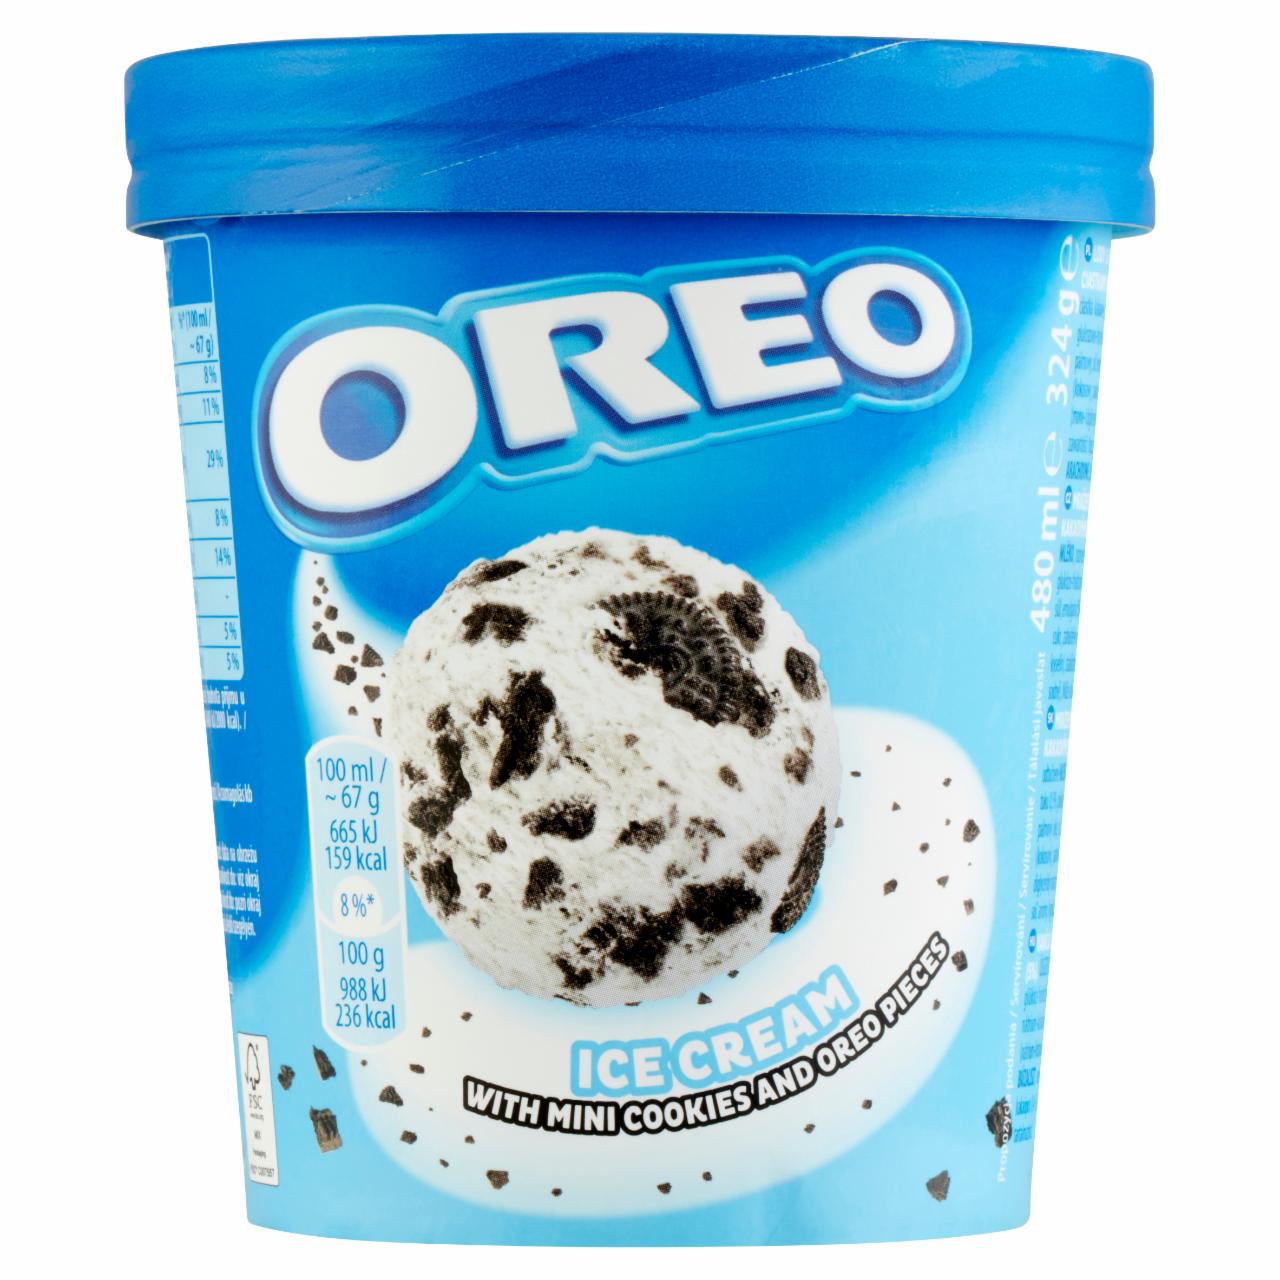 Zdjęcia - Ice cream with mini cookies and oreo pieces Oreo